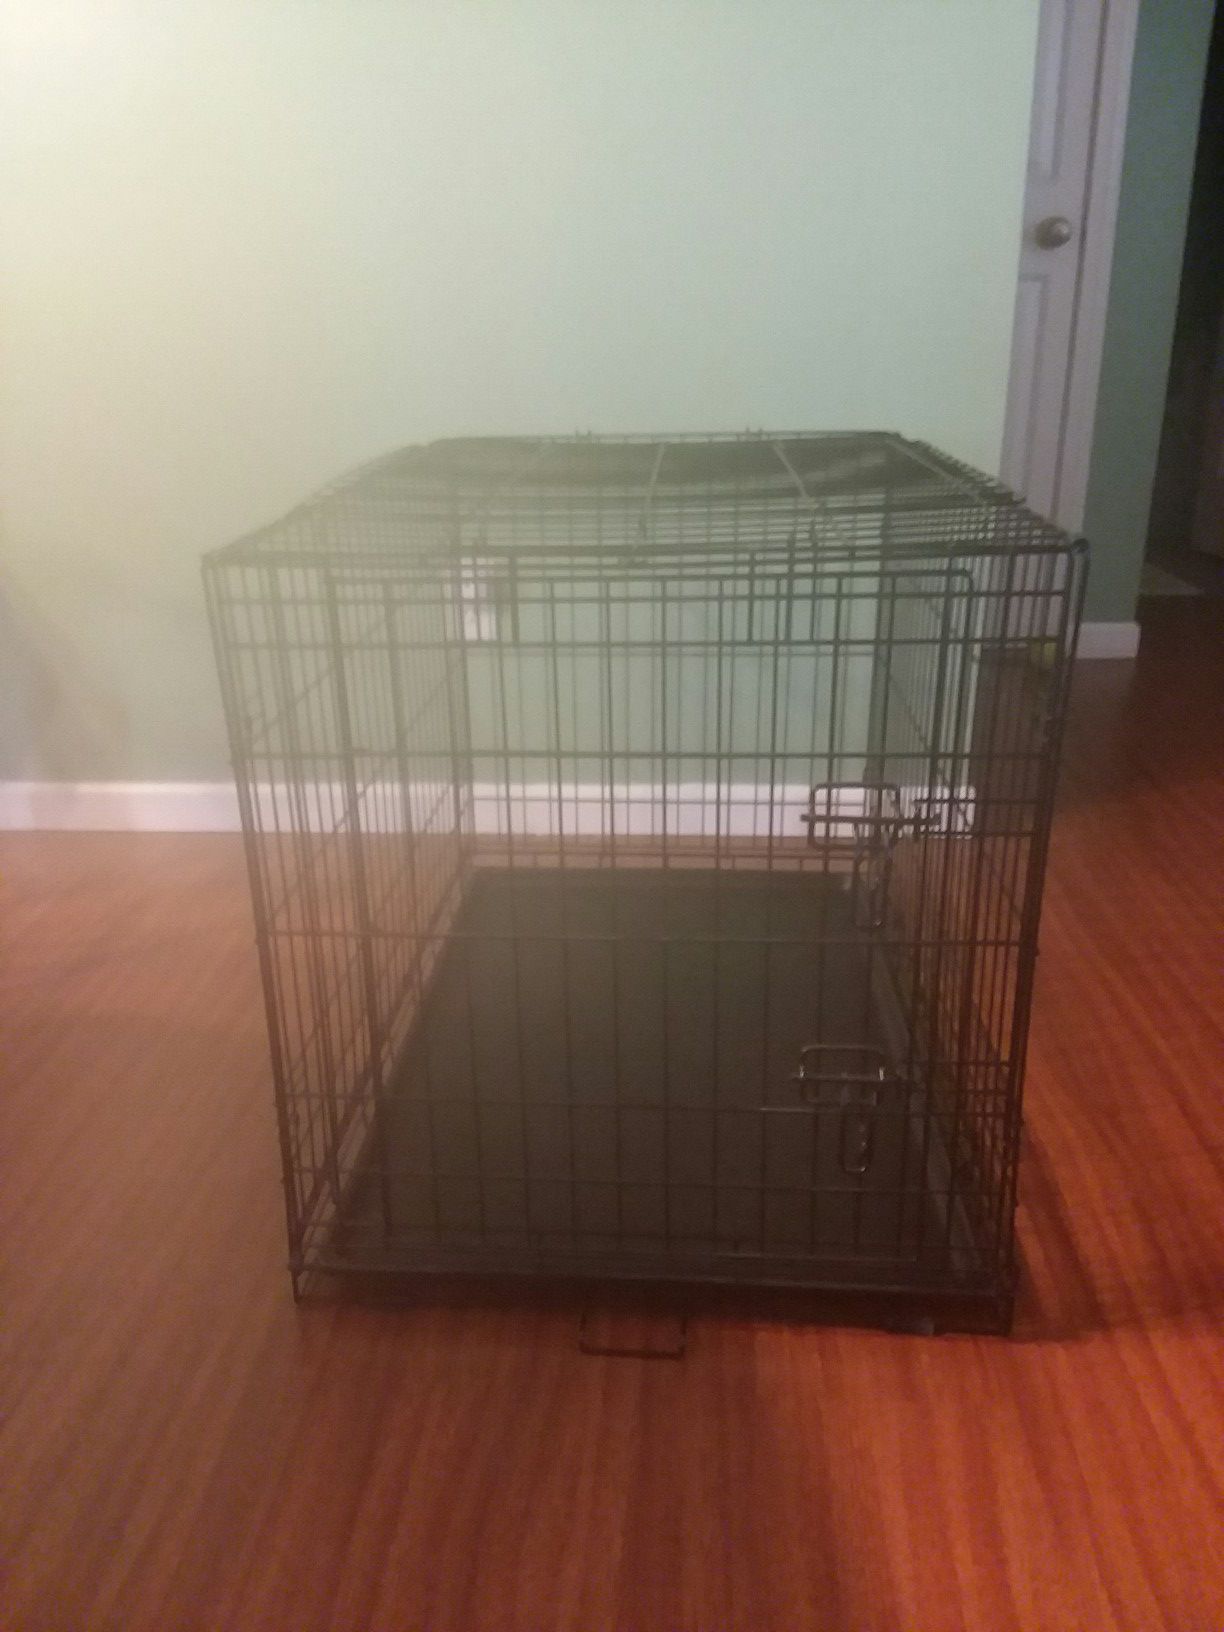 Dog Crate 36" x 24"